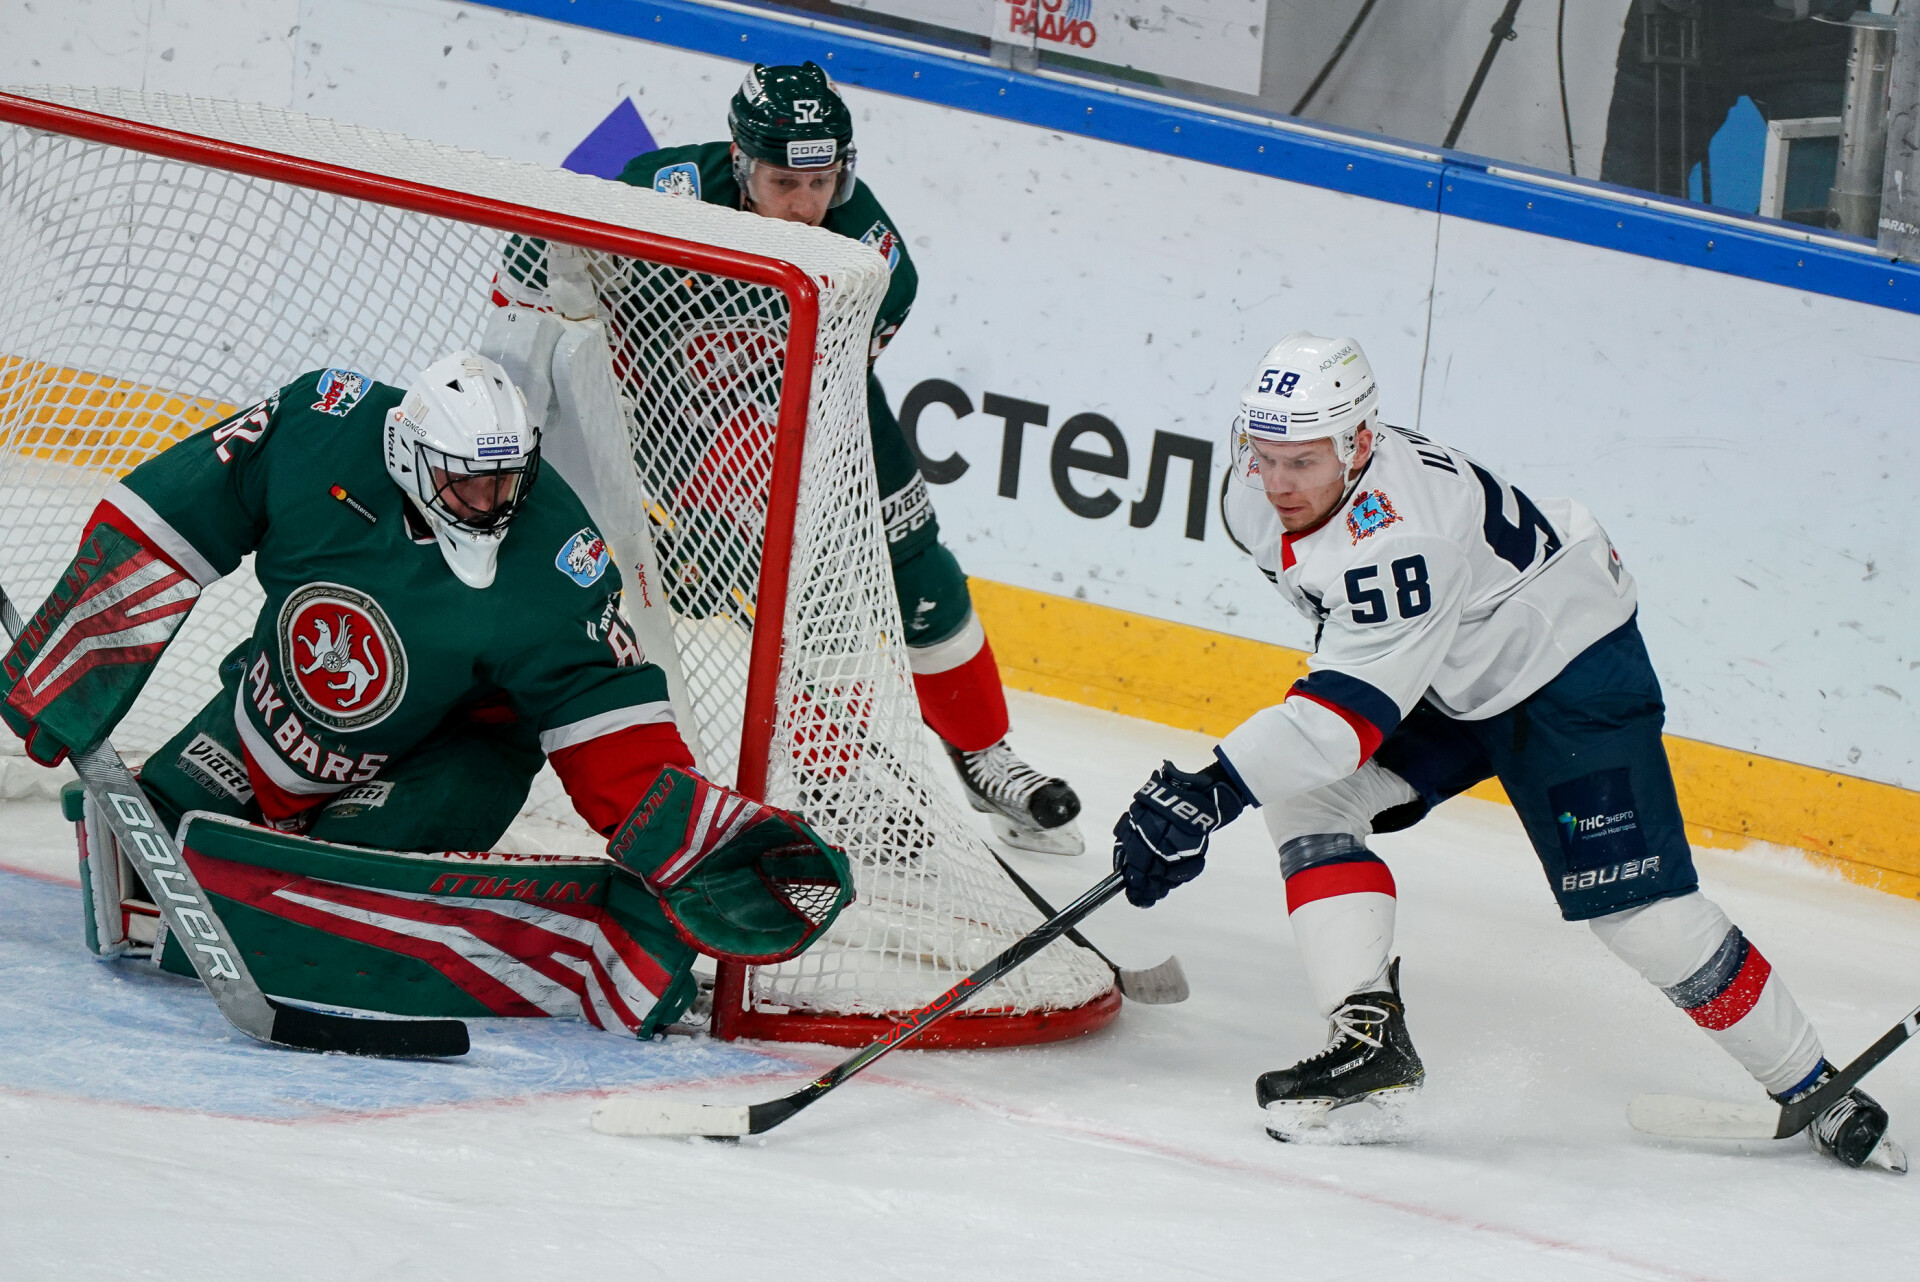 Ak Bars Kazan forward Danis Zaripov - Complete Hockey News